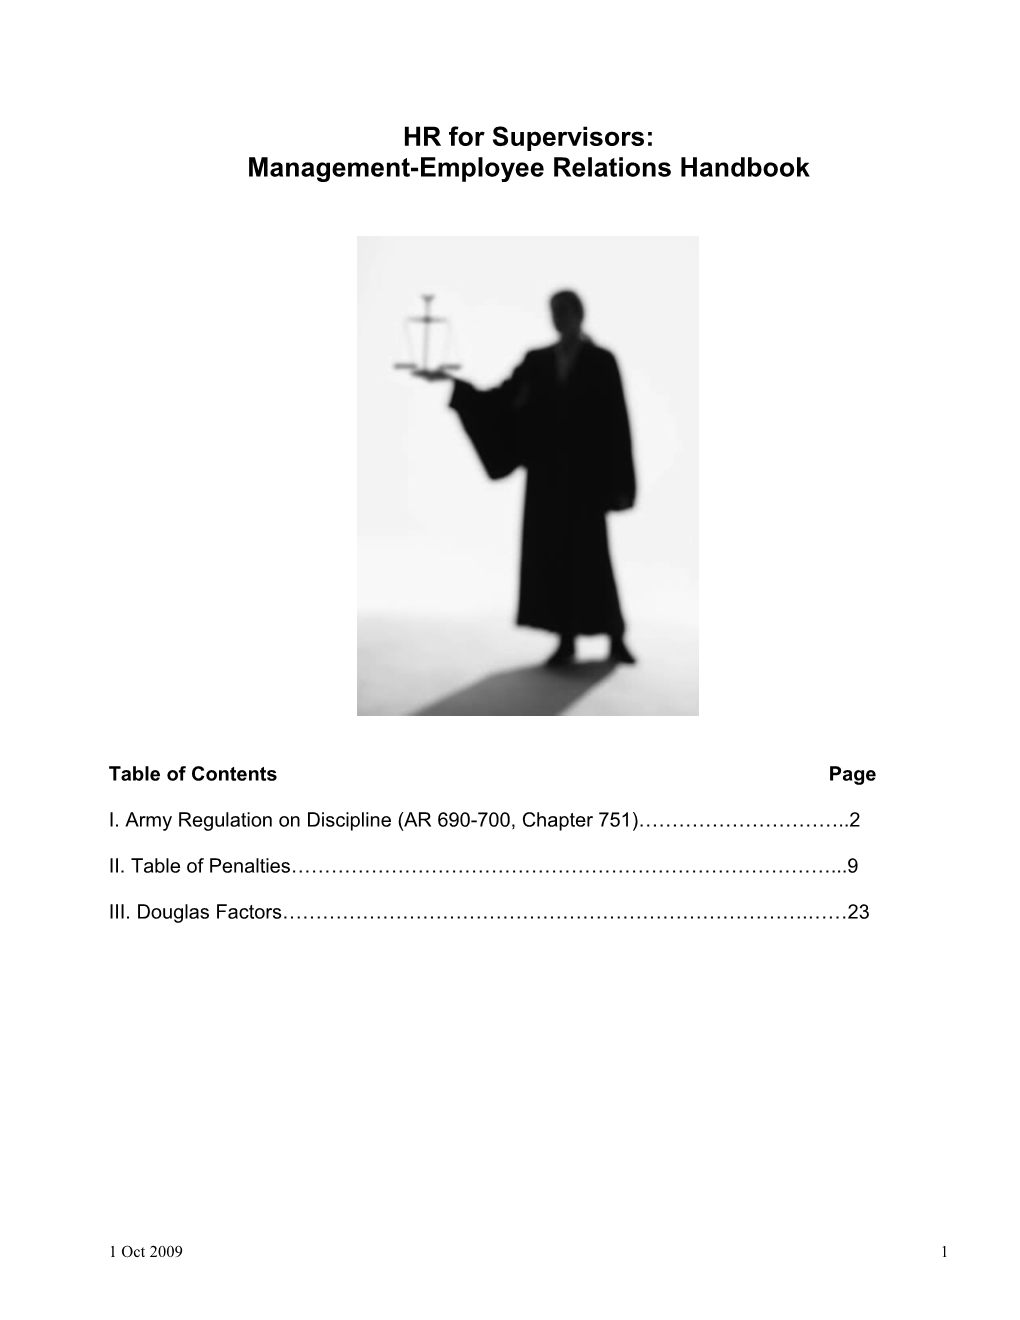 Management-Employee Relations Handbook